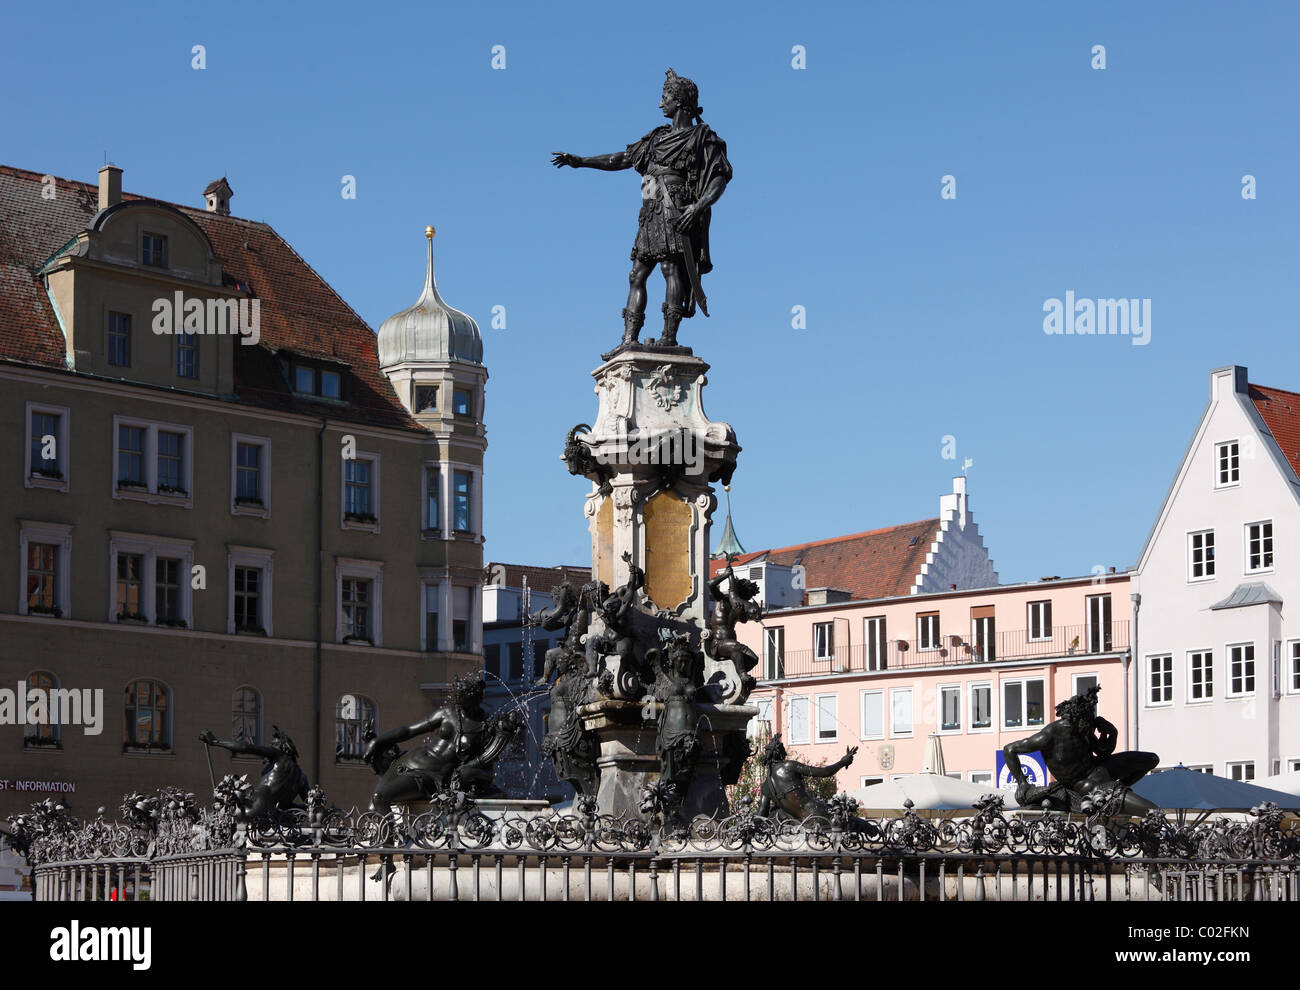 Augustusbrunnen fontana sulla piazza del municipio, Augsburg, Schwaben, Baviera, Germania, Europa Foto Stock